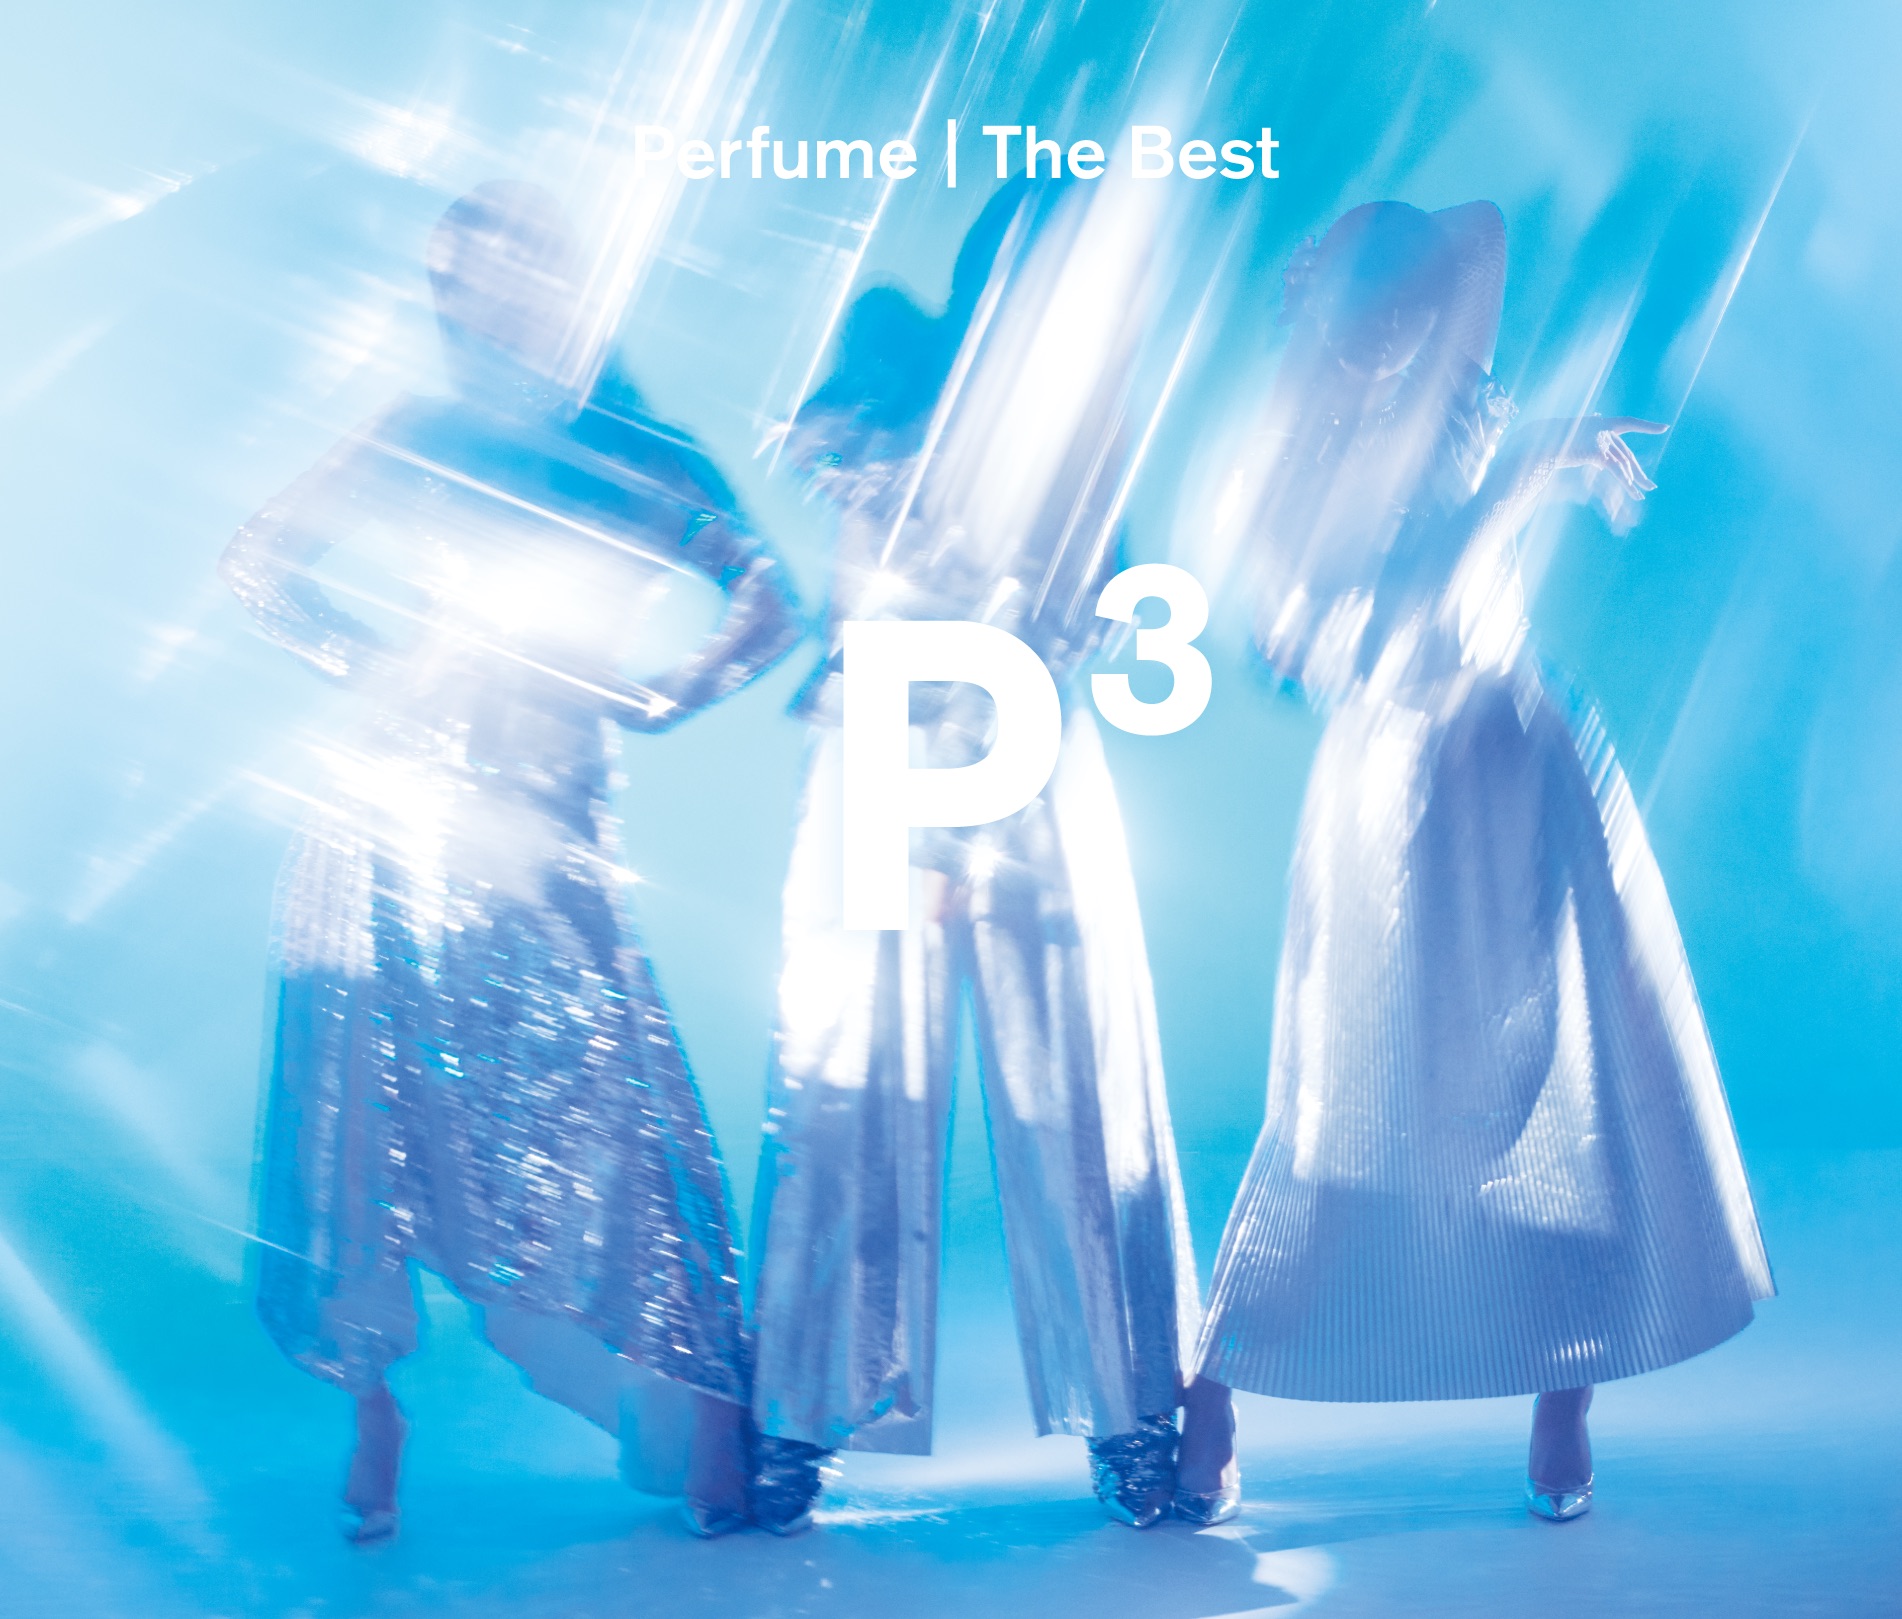 Perfume、初のベストアルバム「Perfume The Best “P Cubed”」発売